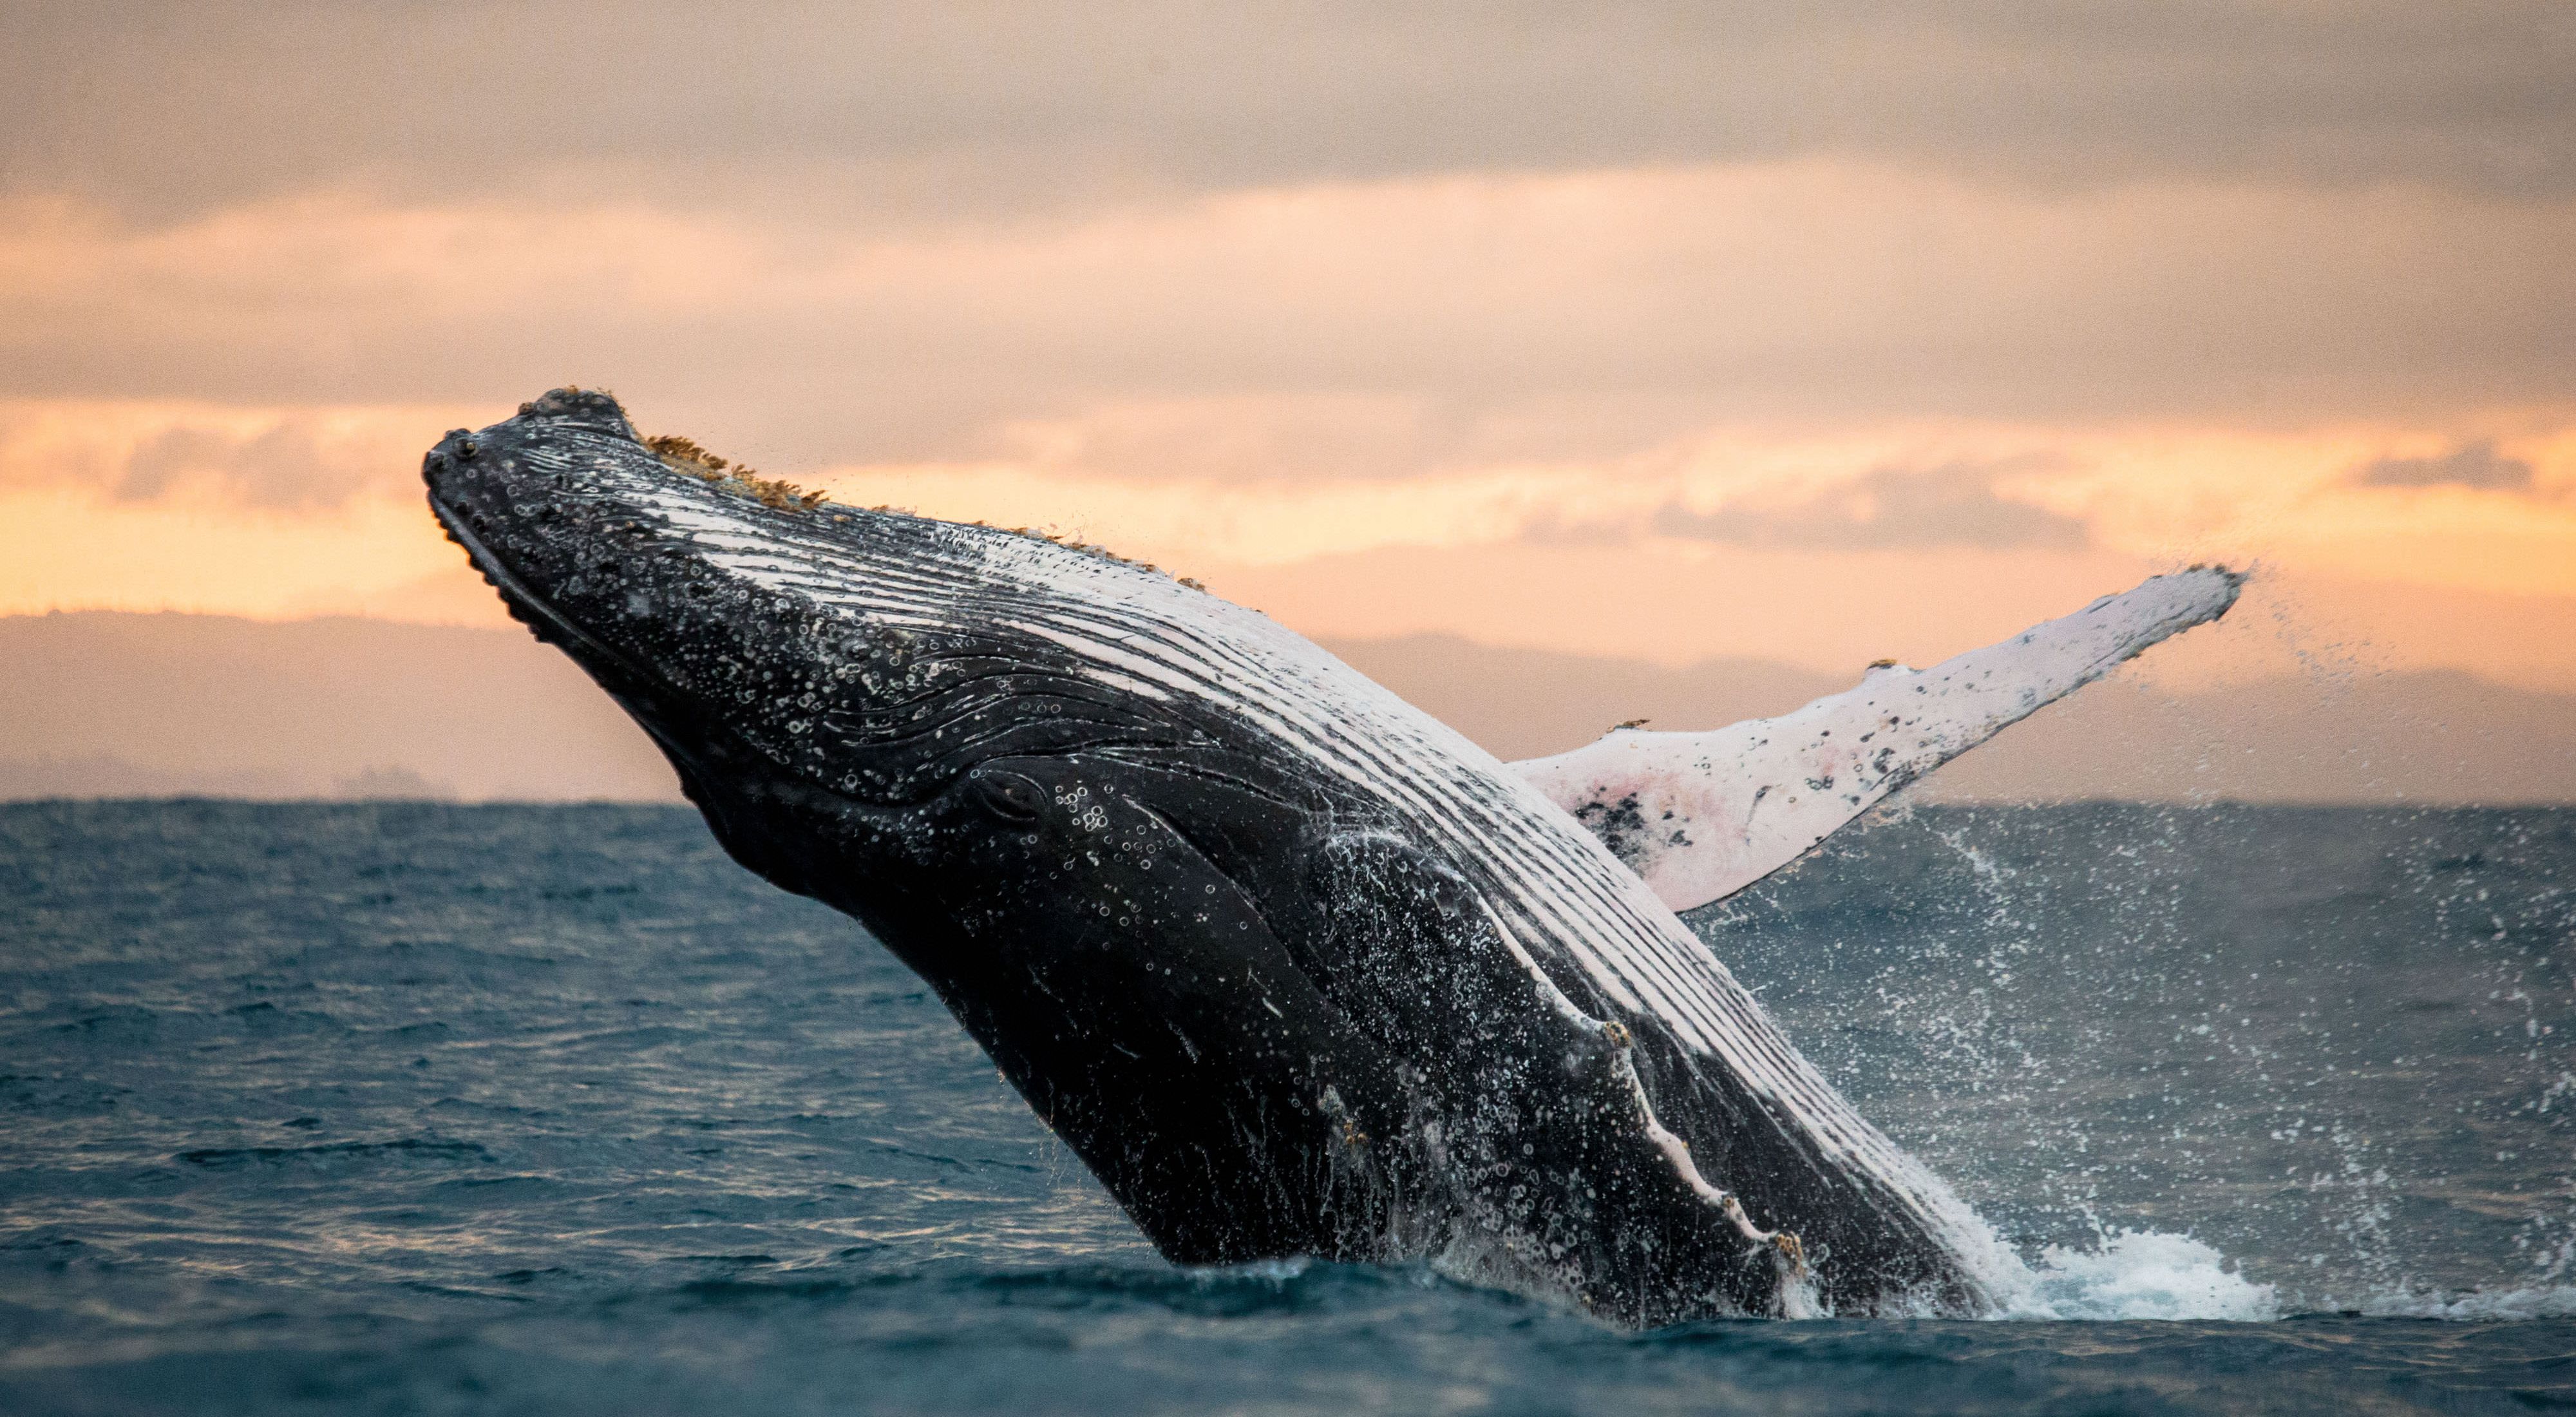 Una ballena jorobada emerge en la costa de California.